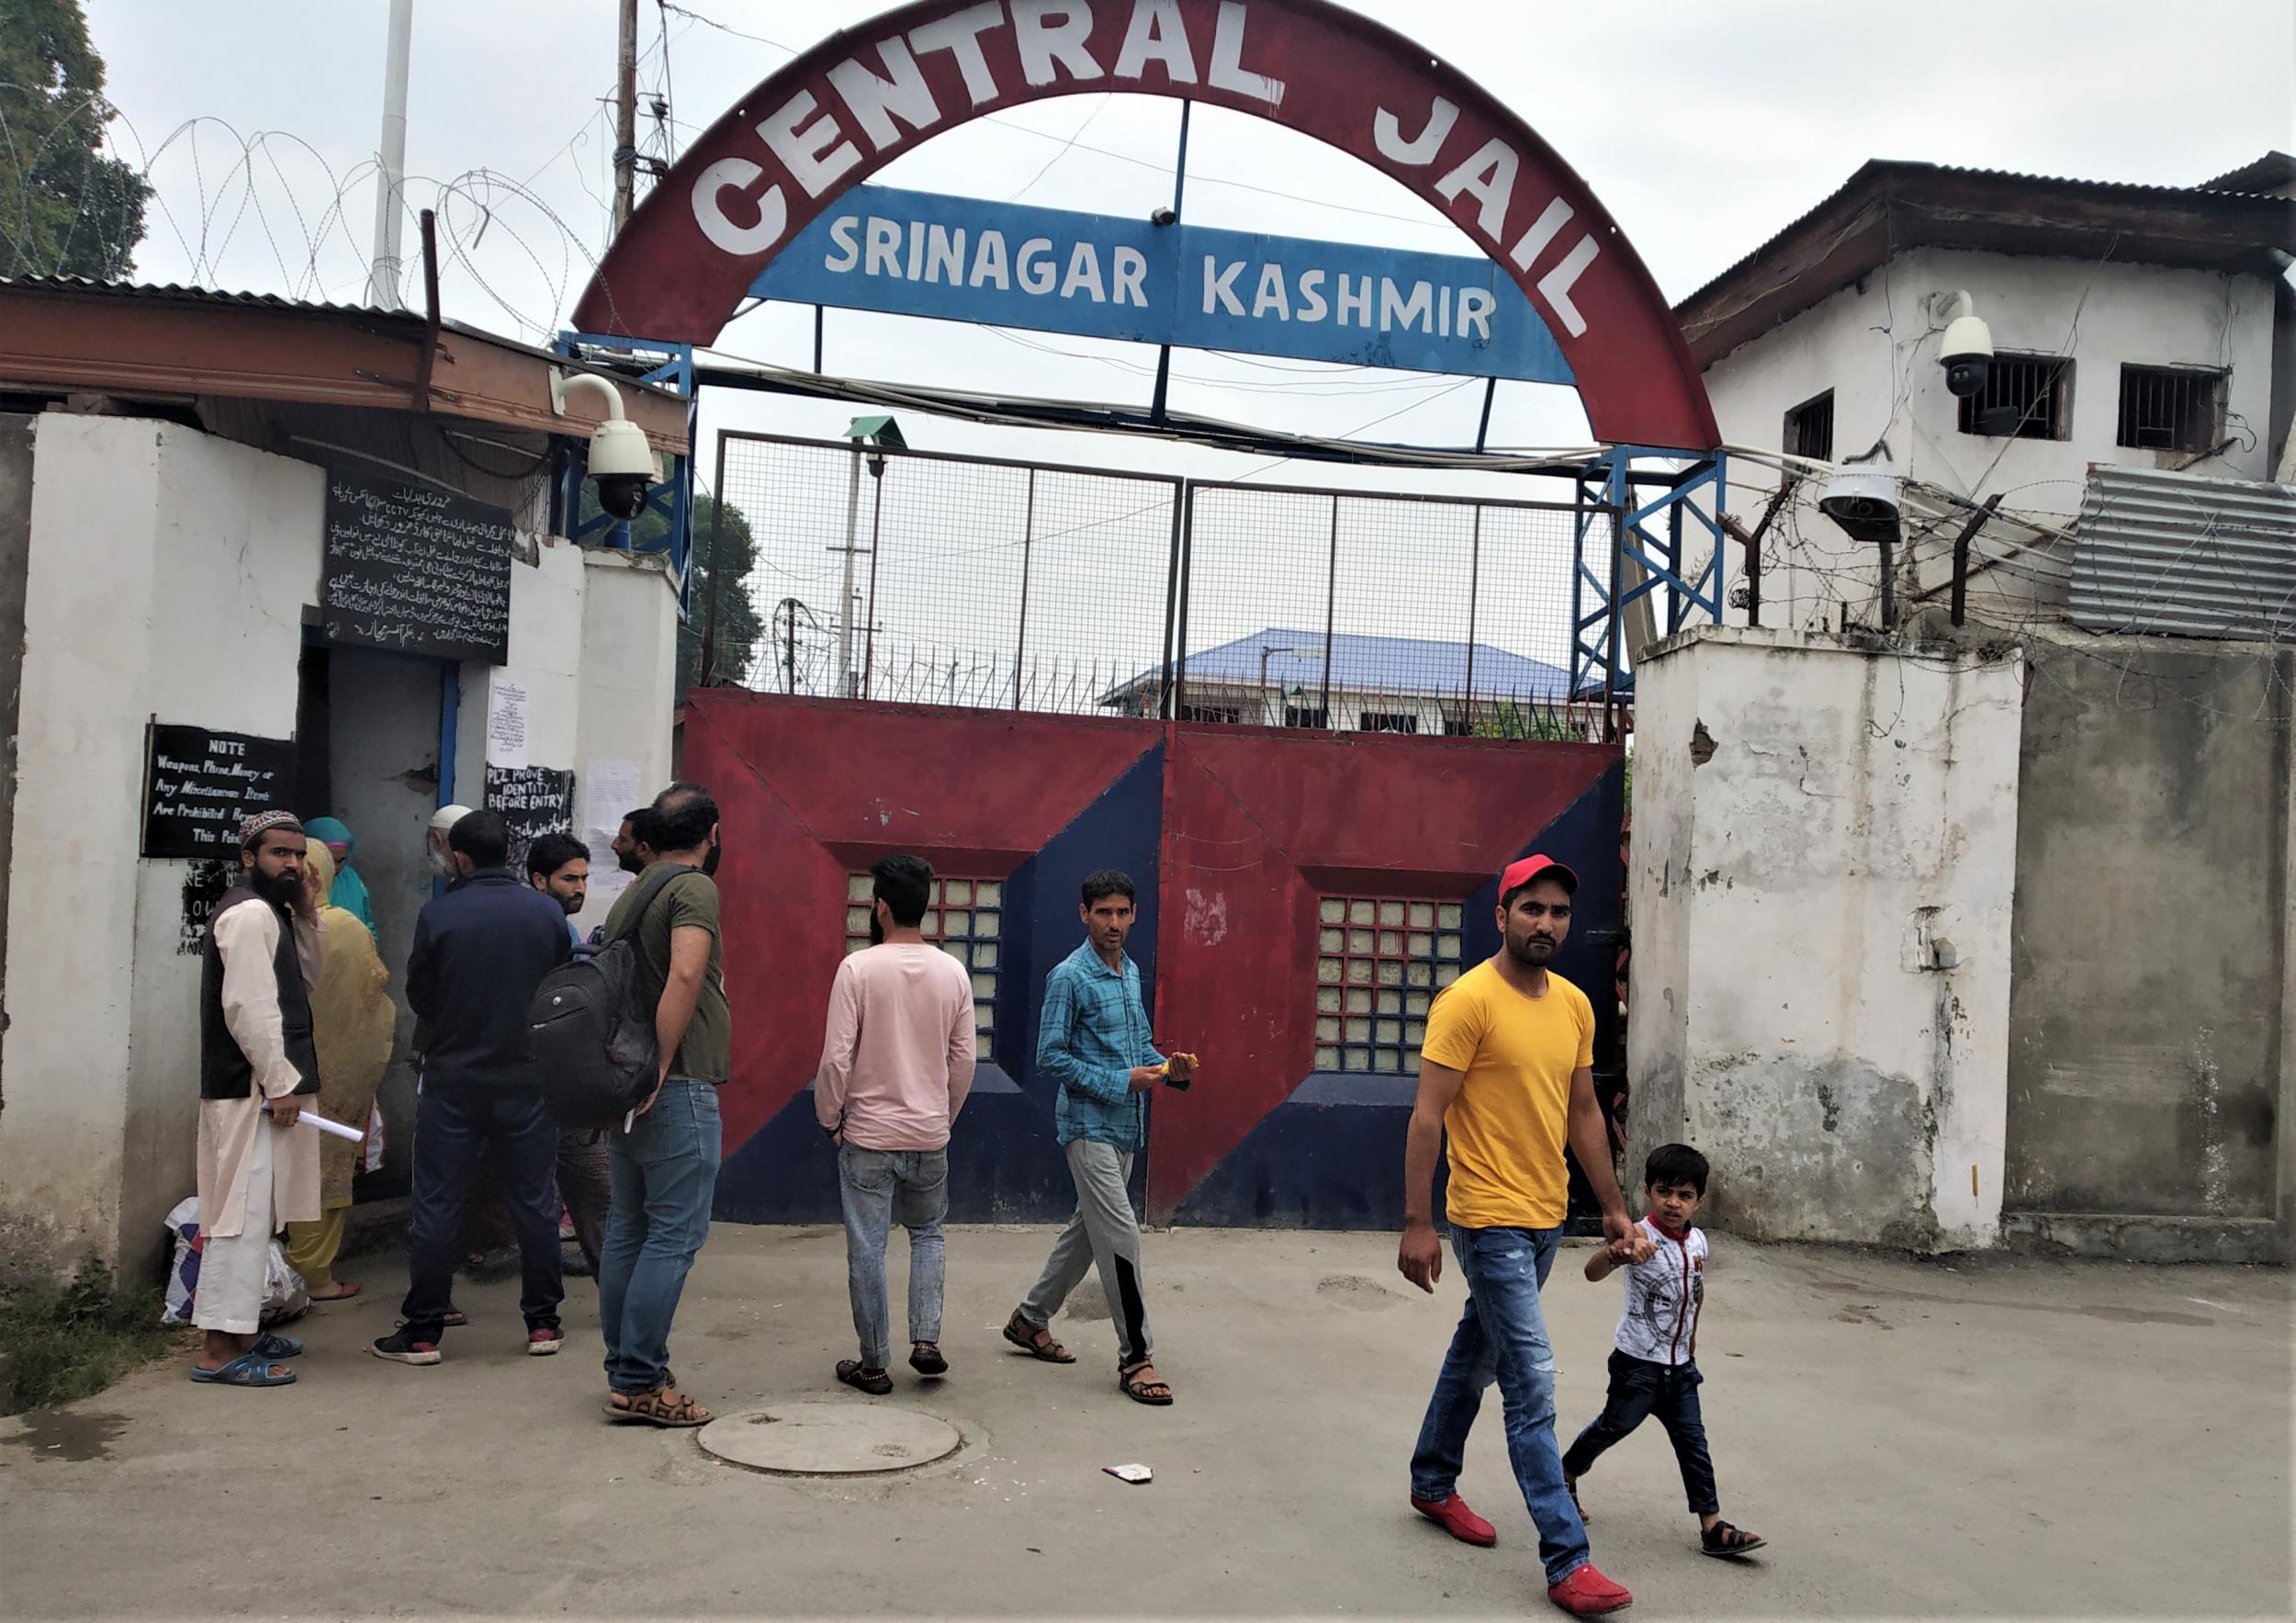 Central Jail in Srinagar, Kashmir